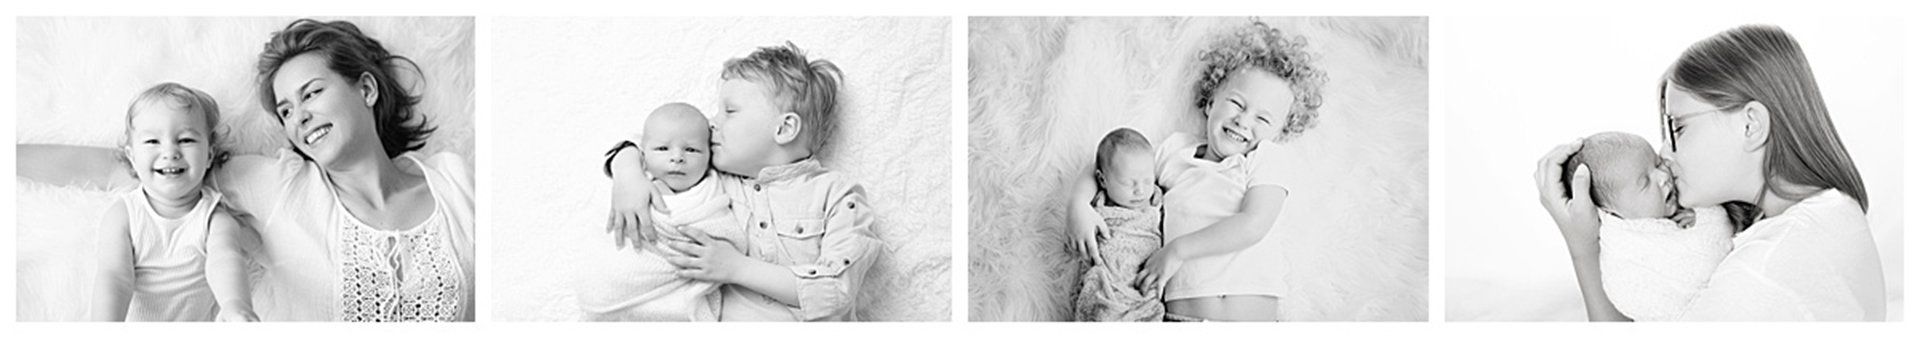 geschwisterbilder-neugeborenenshooting-babyfotograf-newborn-shooting-scarlett-henzl-kruemelkeksfotografie